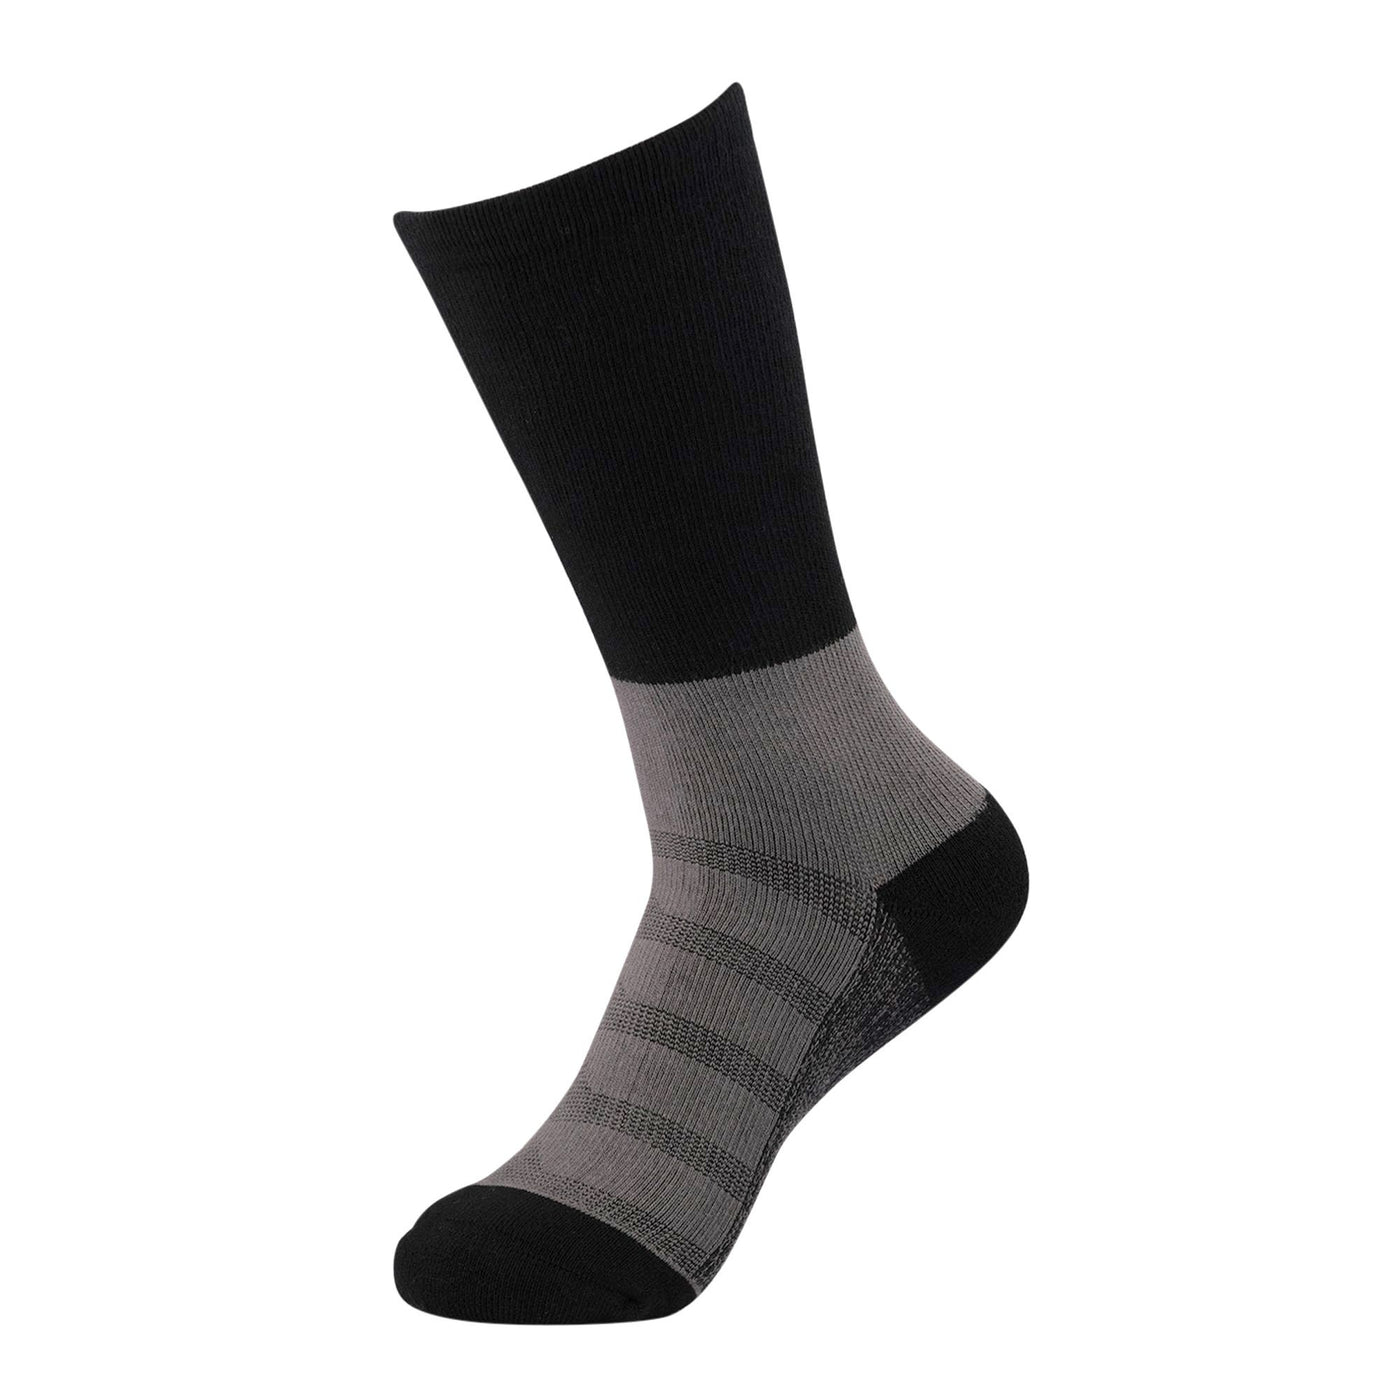 Black/Slate 2-tone Dress Sock dress socks ArchTek Women's Medium (sizes 8-10.5) Black